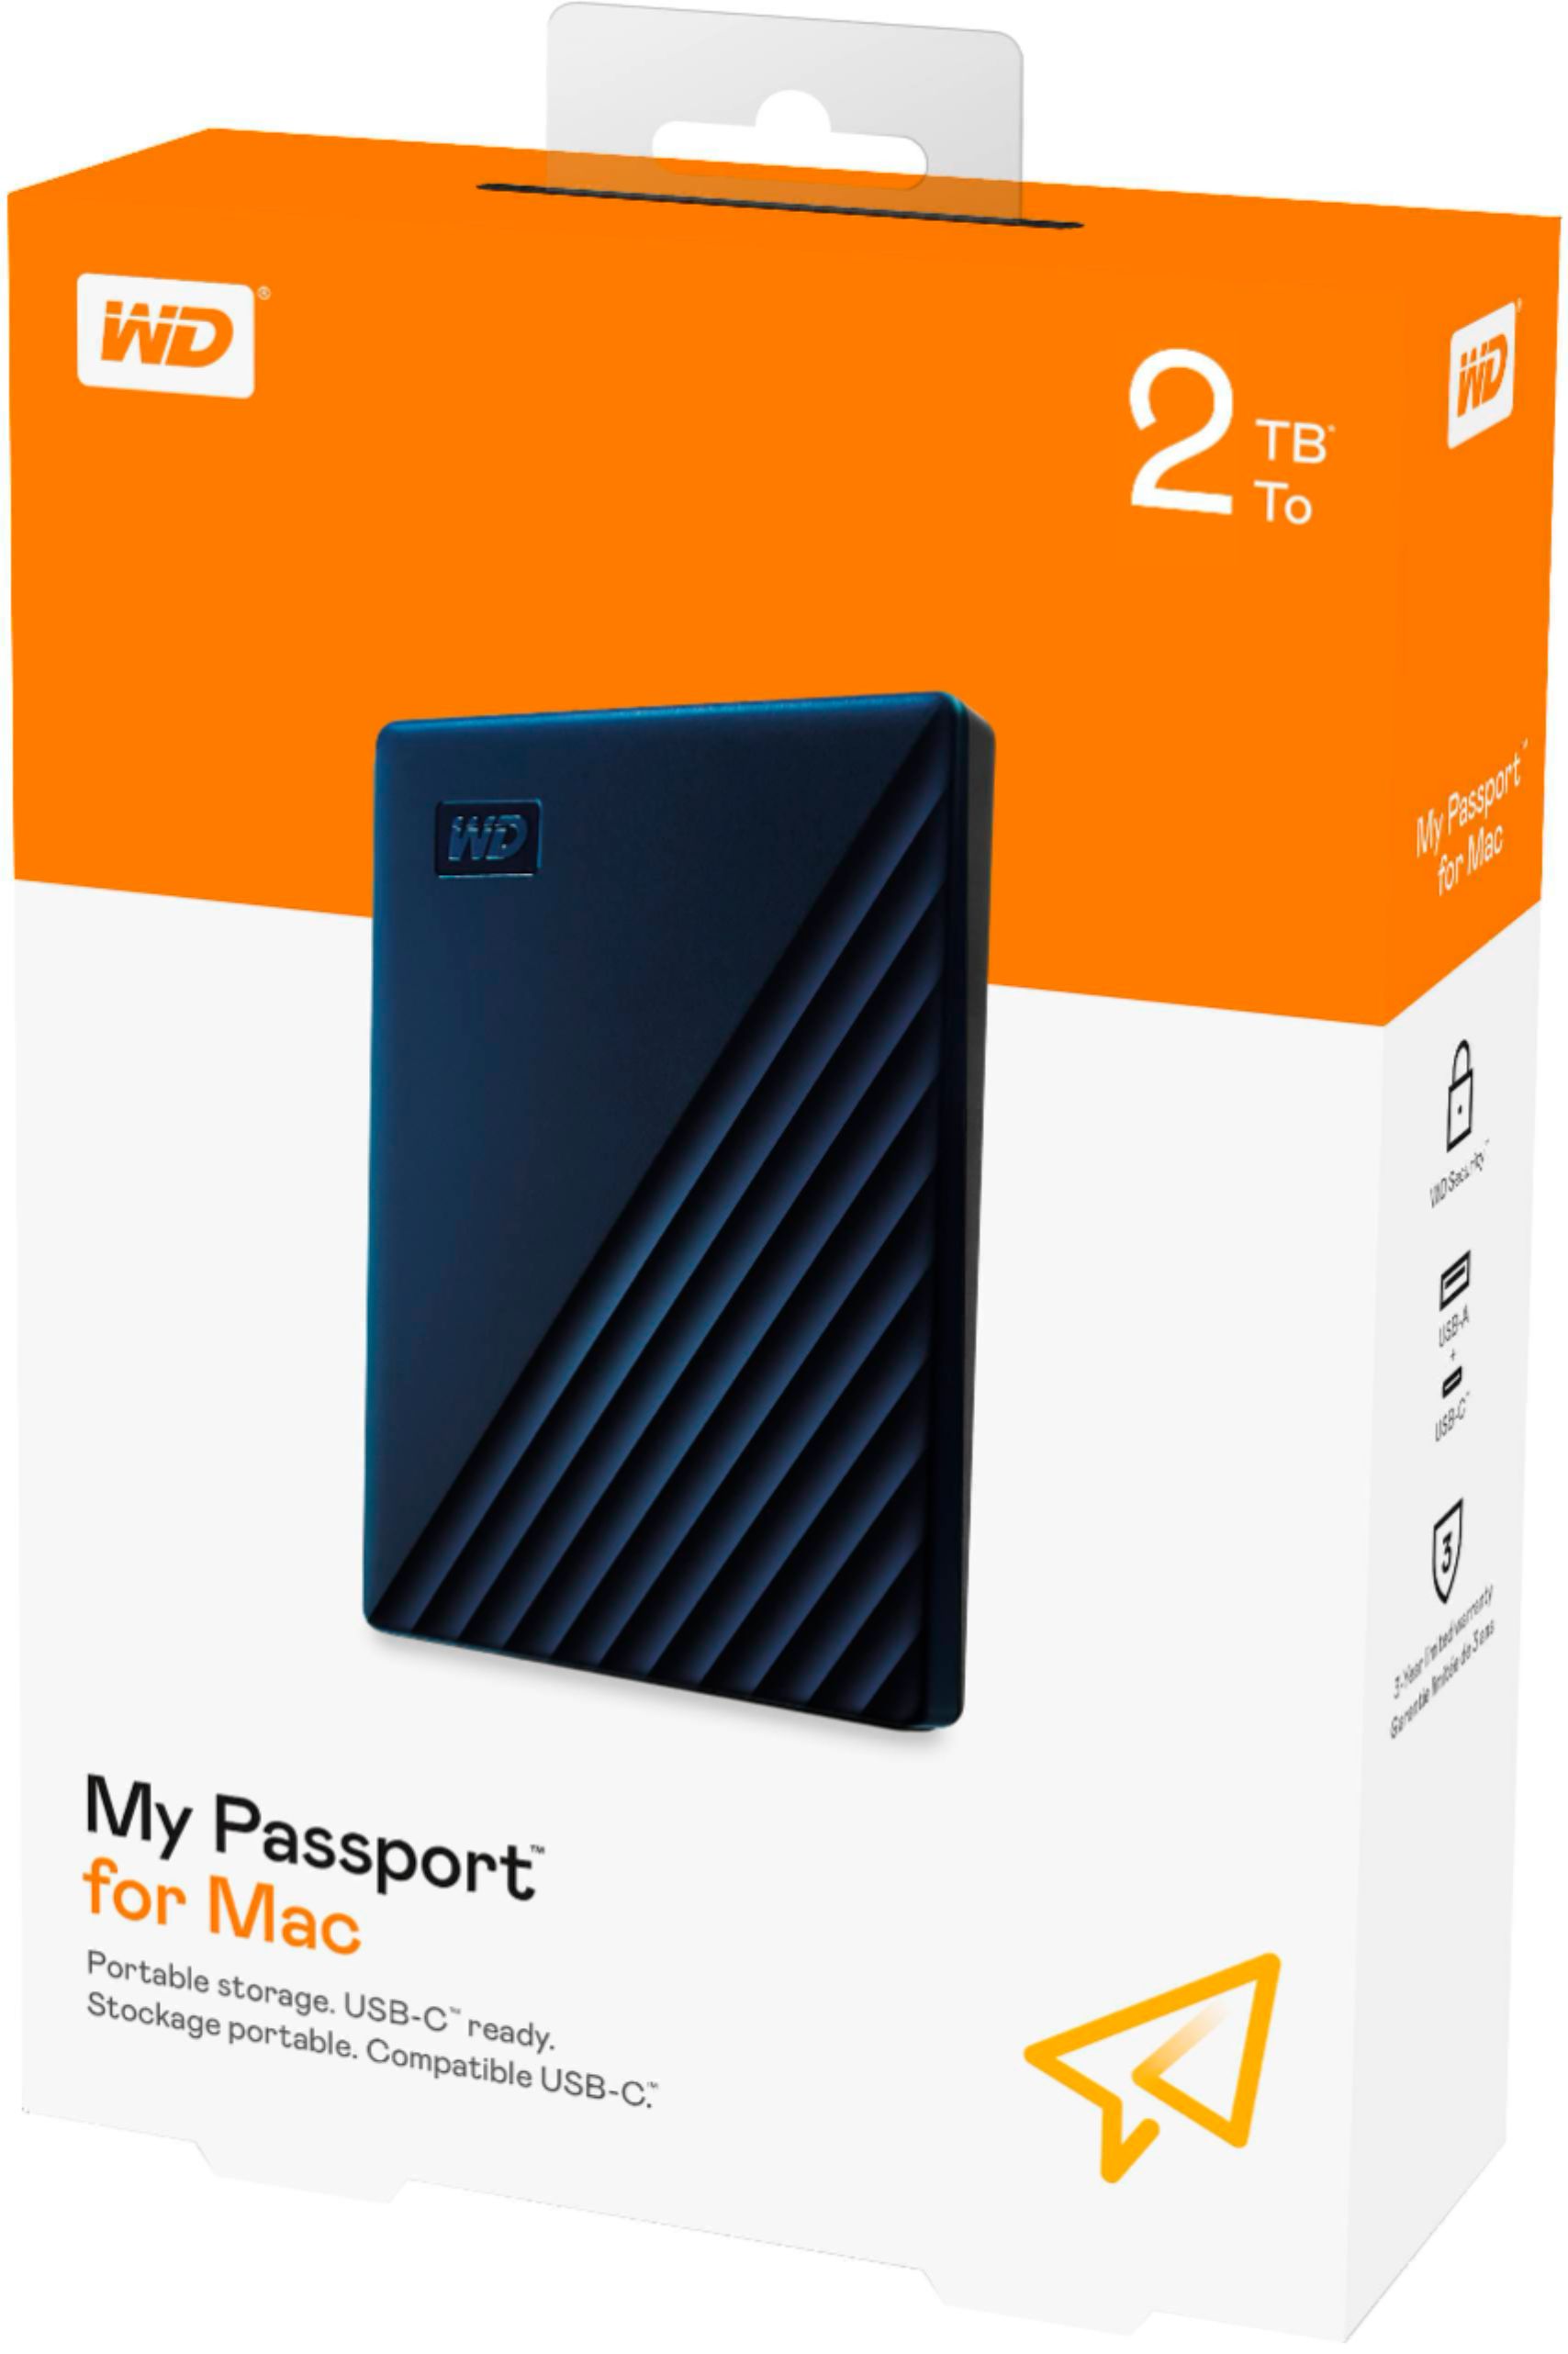 My Passport Mac 2TB External USB 3.0 Portable Hard Drive Blue WDBA2D0020BBL-WESN - Best Buy